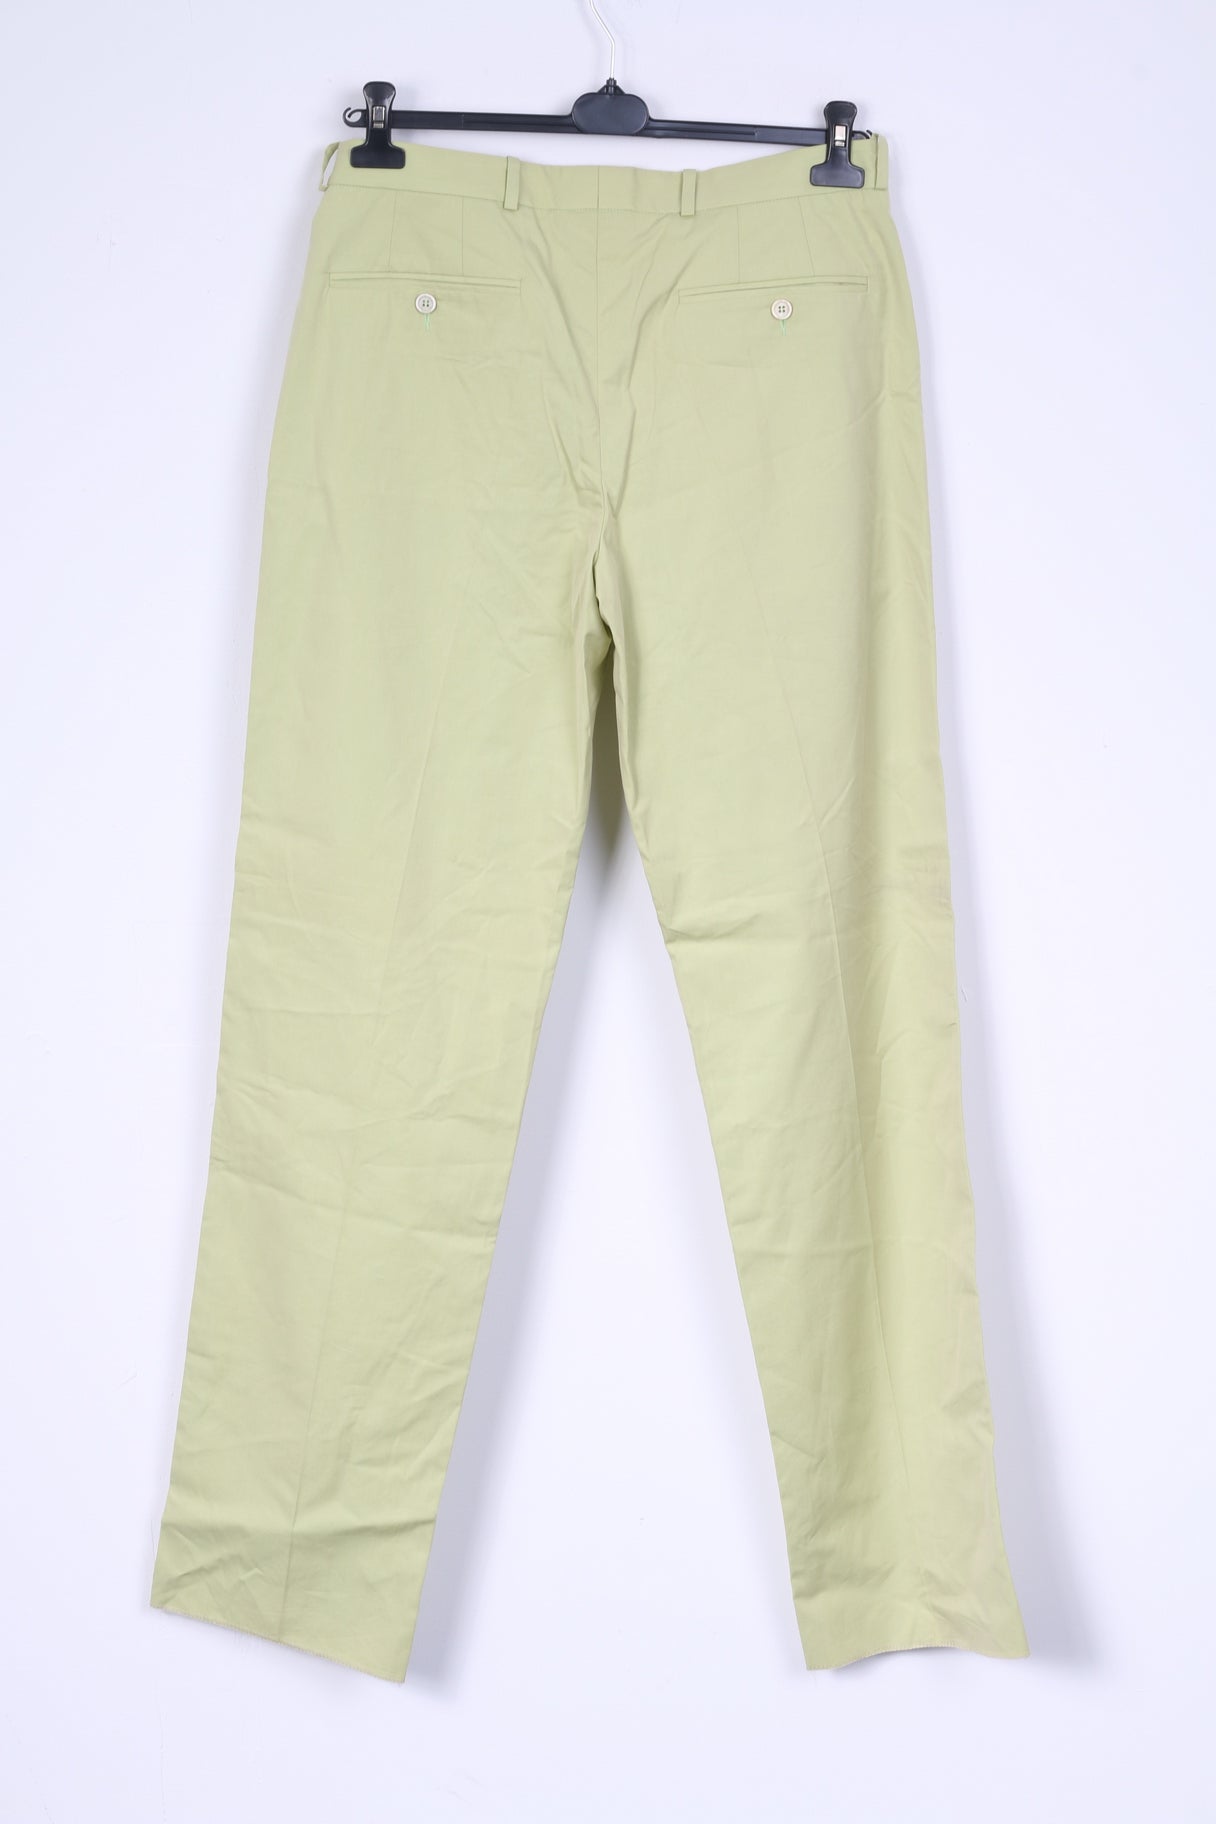 Nuovi pantaloni Versace da uomo 50 in cotone verde oliva eleganti pantaloni Gianni Italia